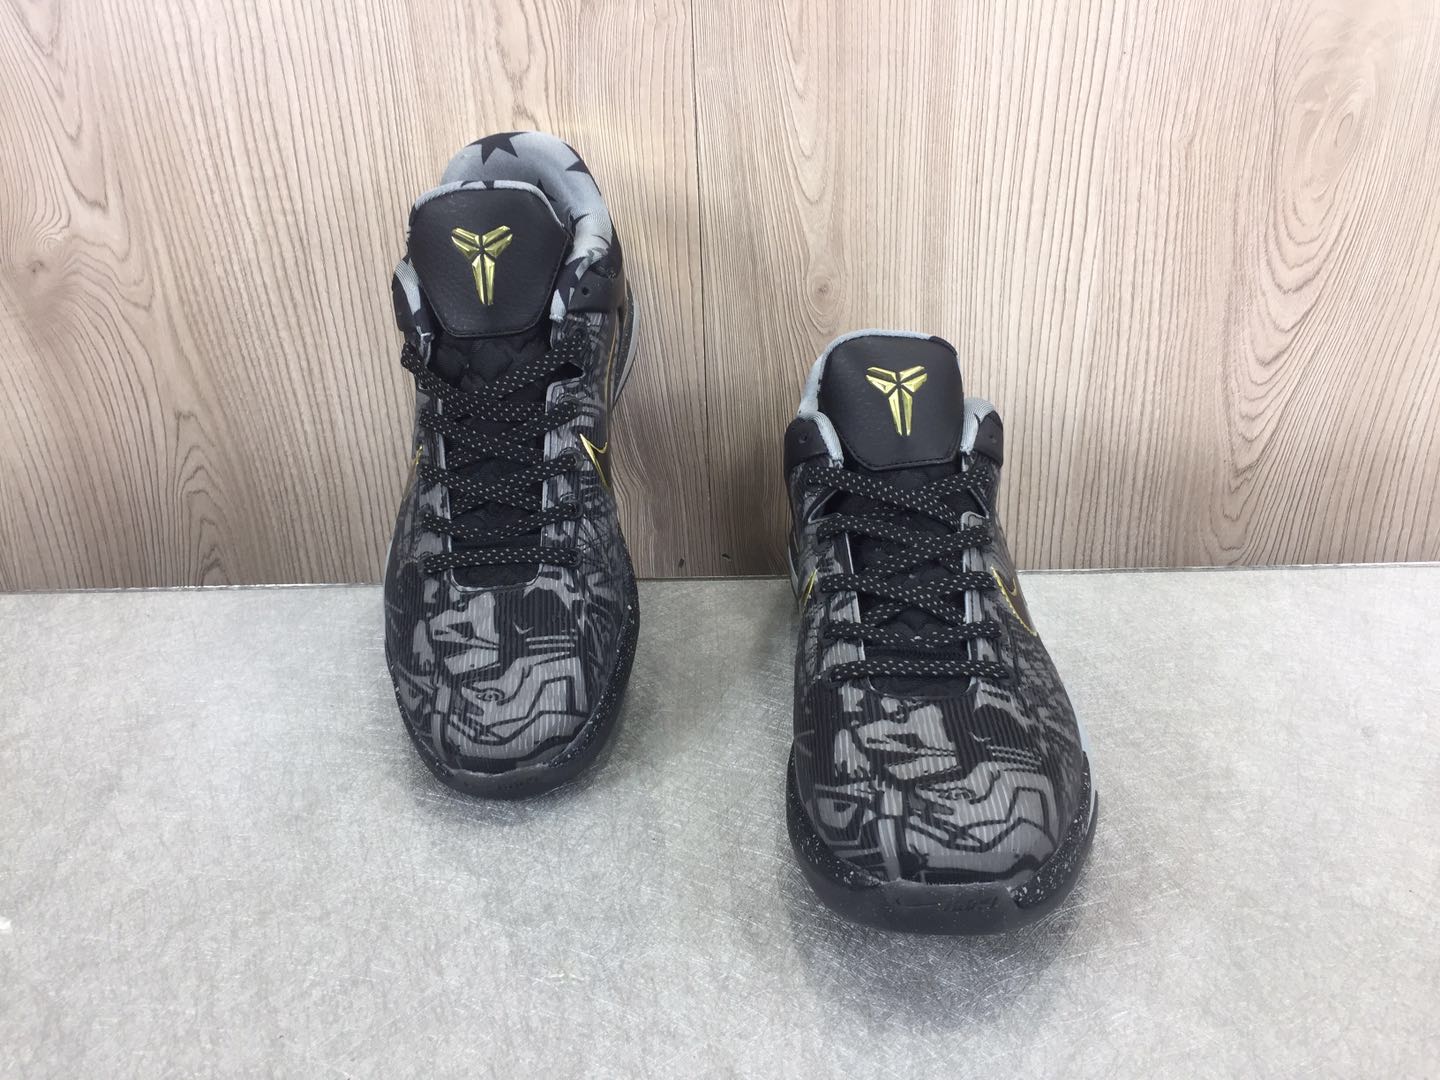 New Nike Kobe Bryant VII BHM Shoes